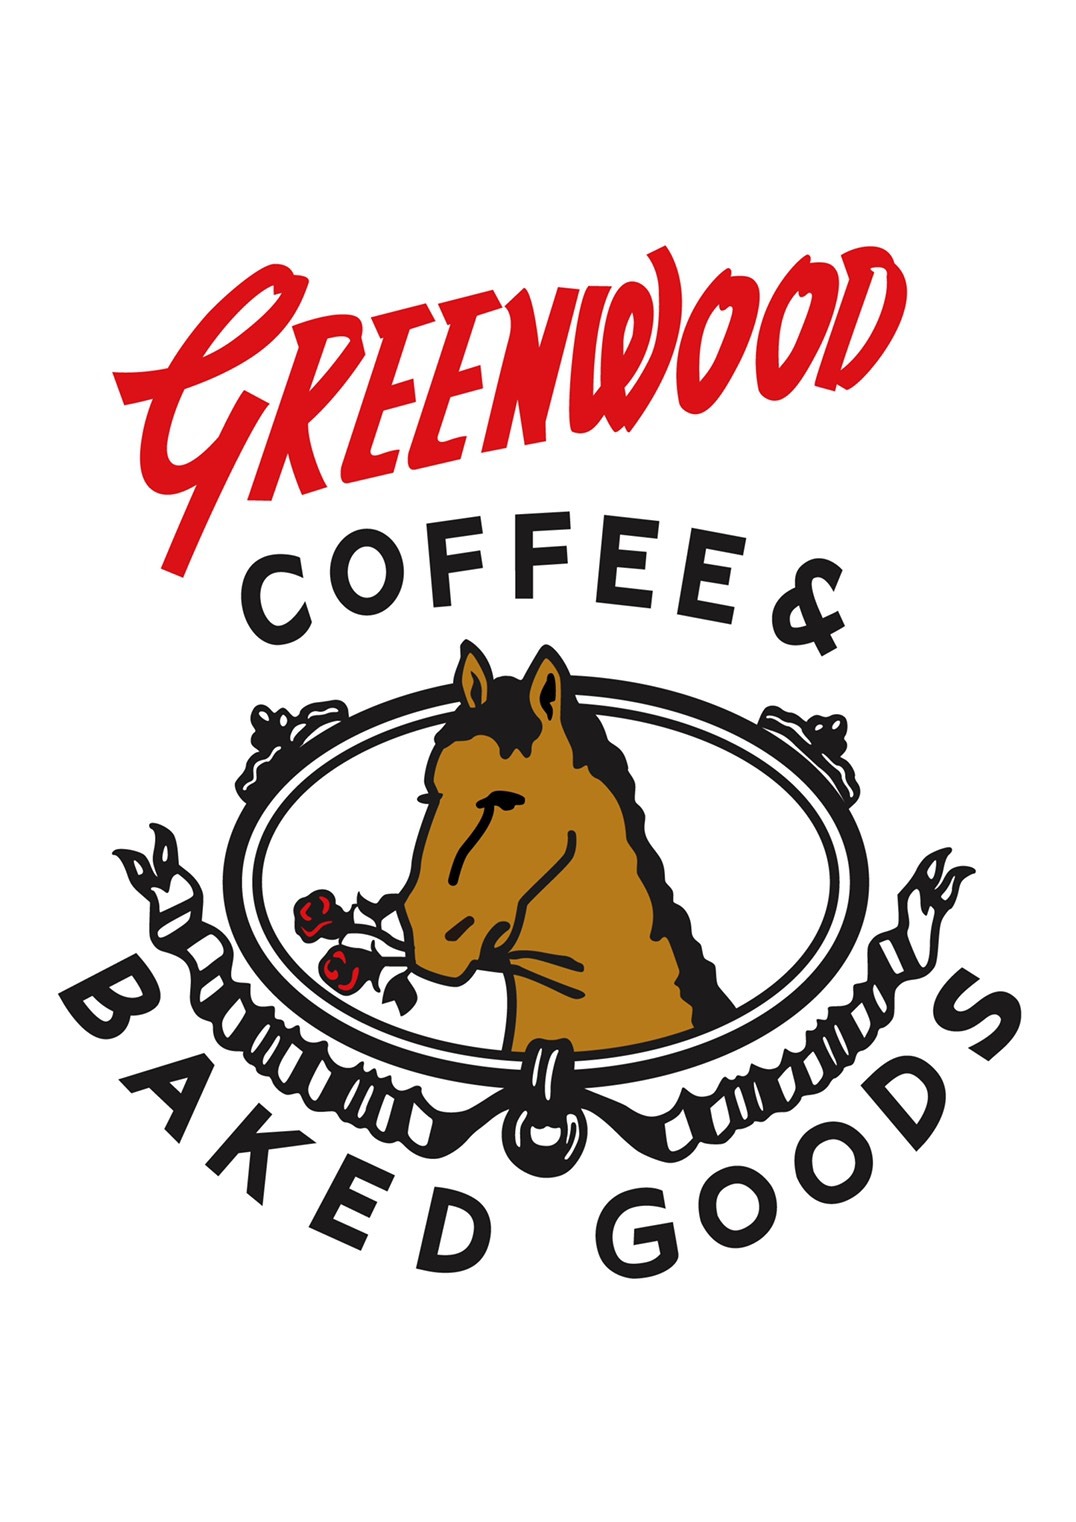 GREENWOOD COFFEE & BAKED GOODS